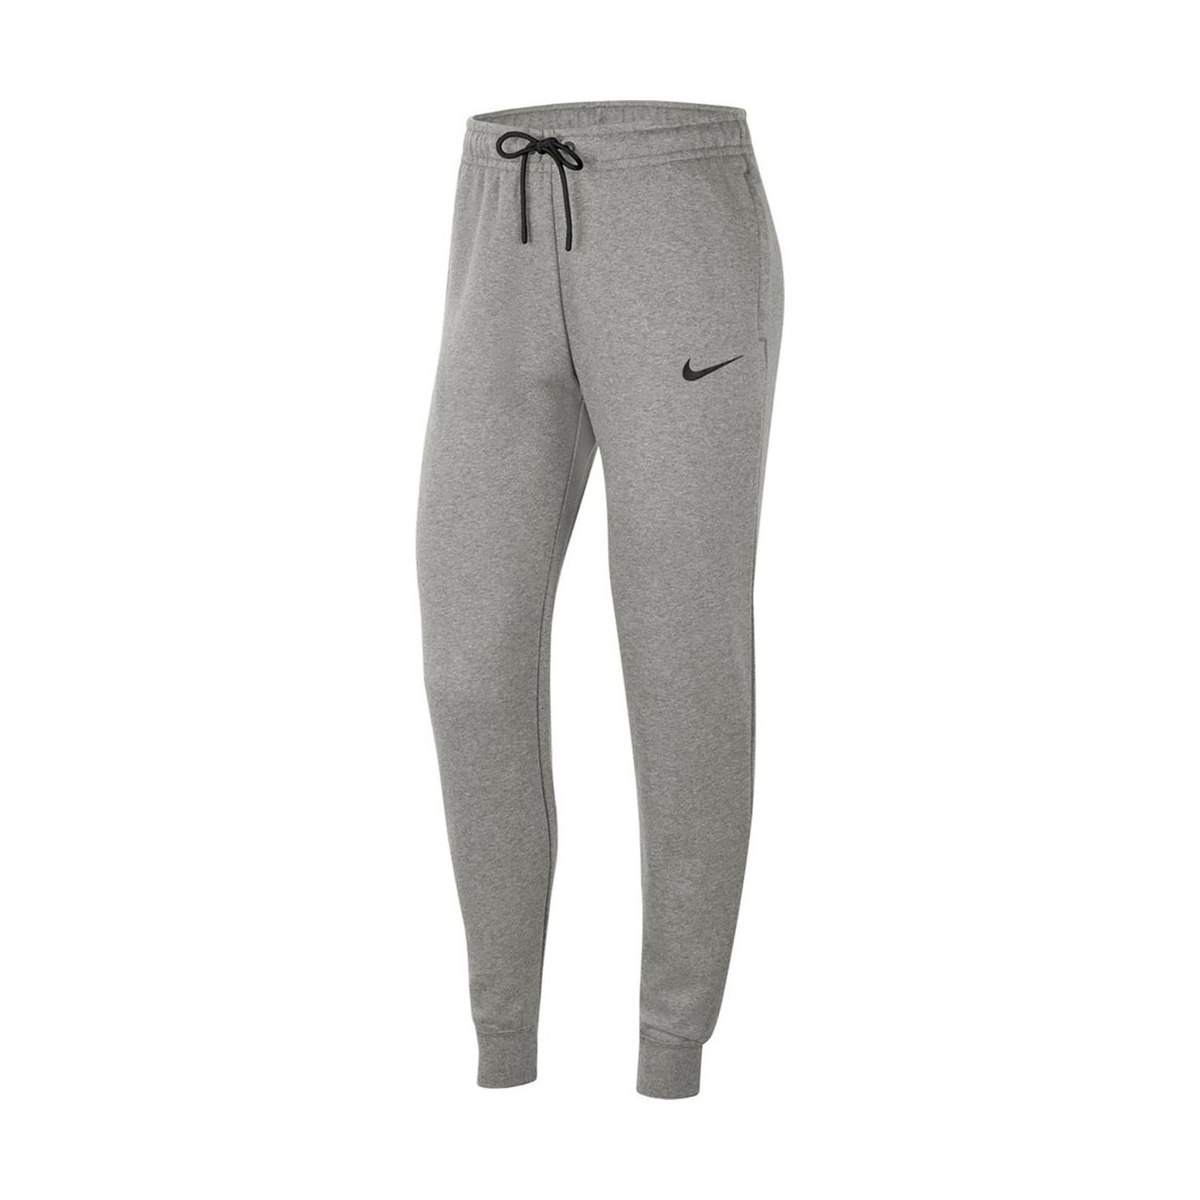 Nike Sportswear Essential Kadın Gri Eşofman Altı (CW6961-063)